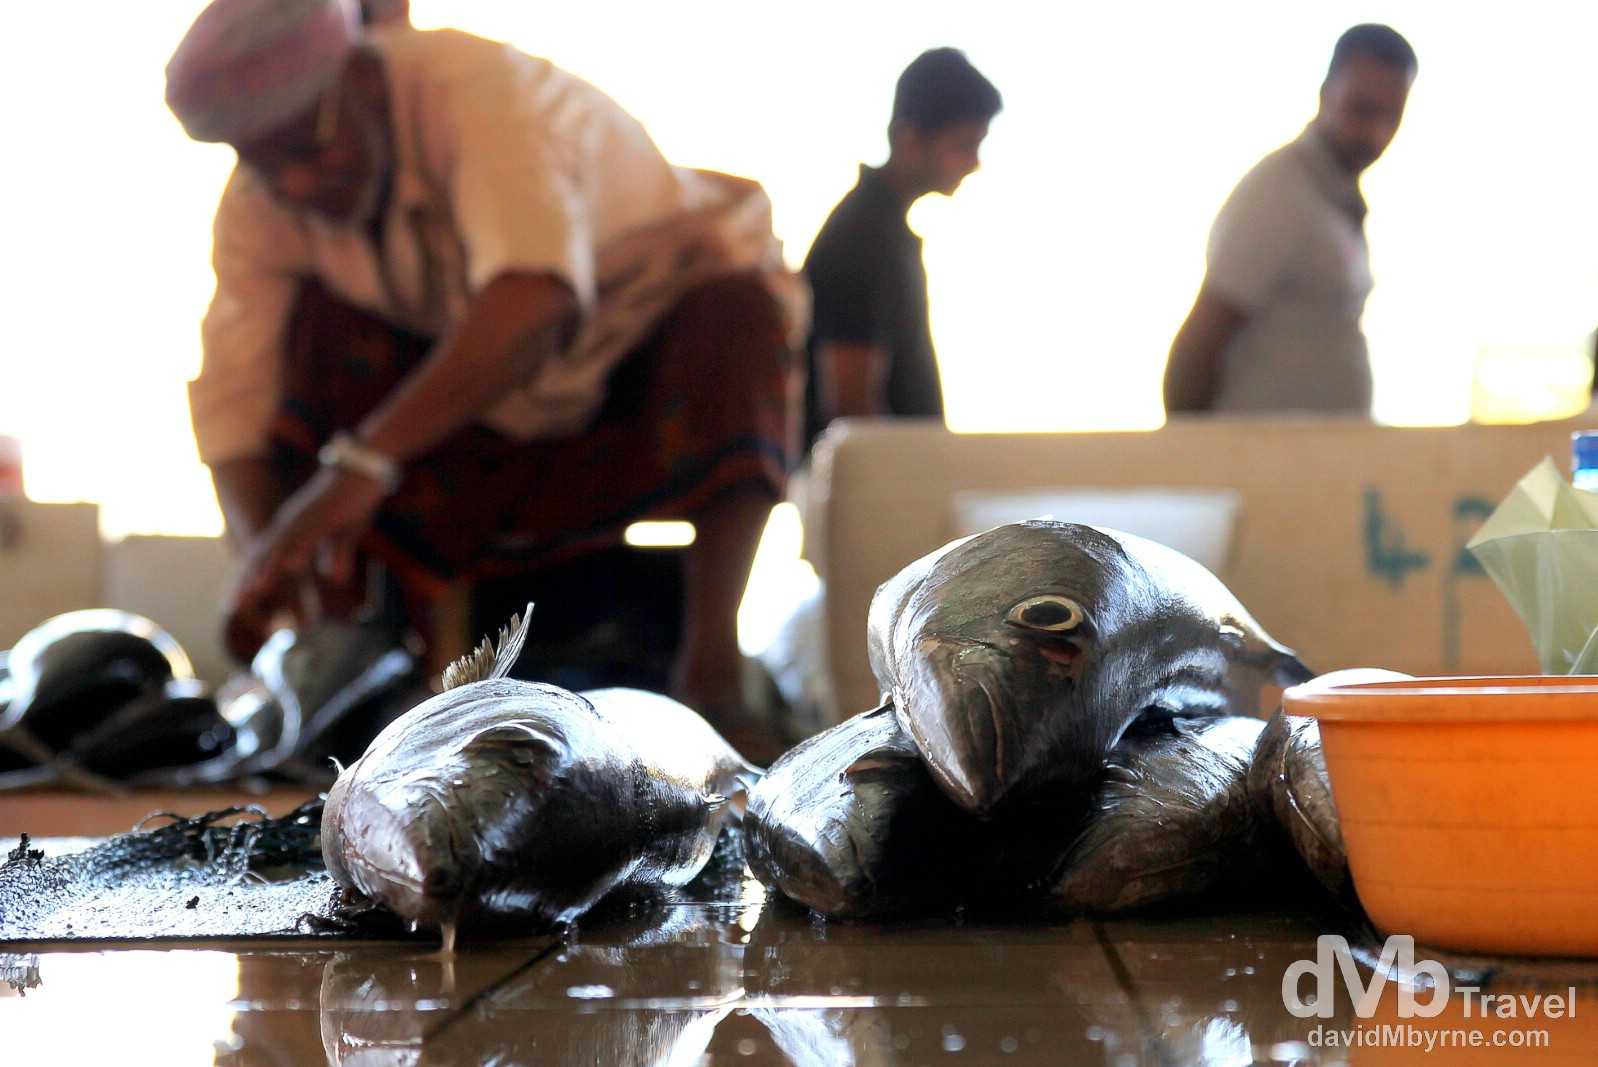 Fish Market, Mutrah, Muscat, Oman. April 26th, 2014.